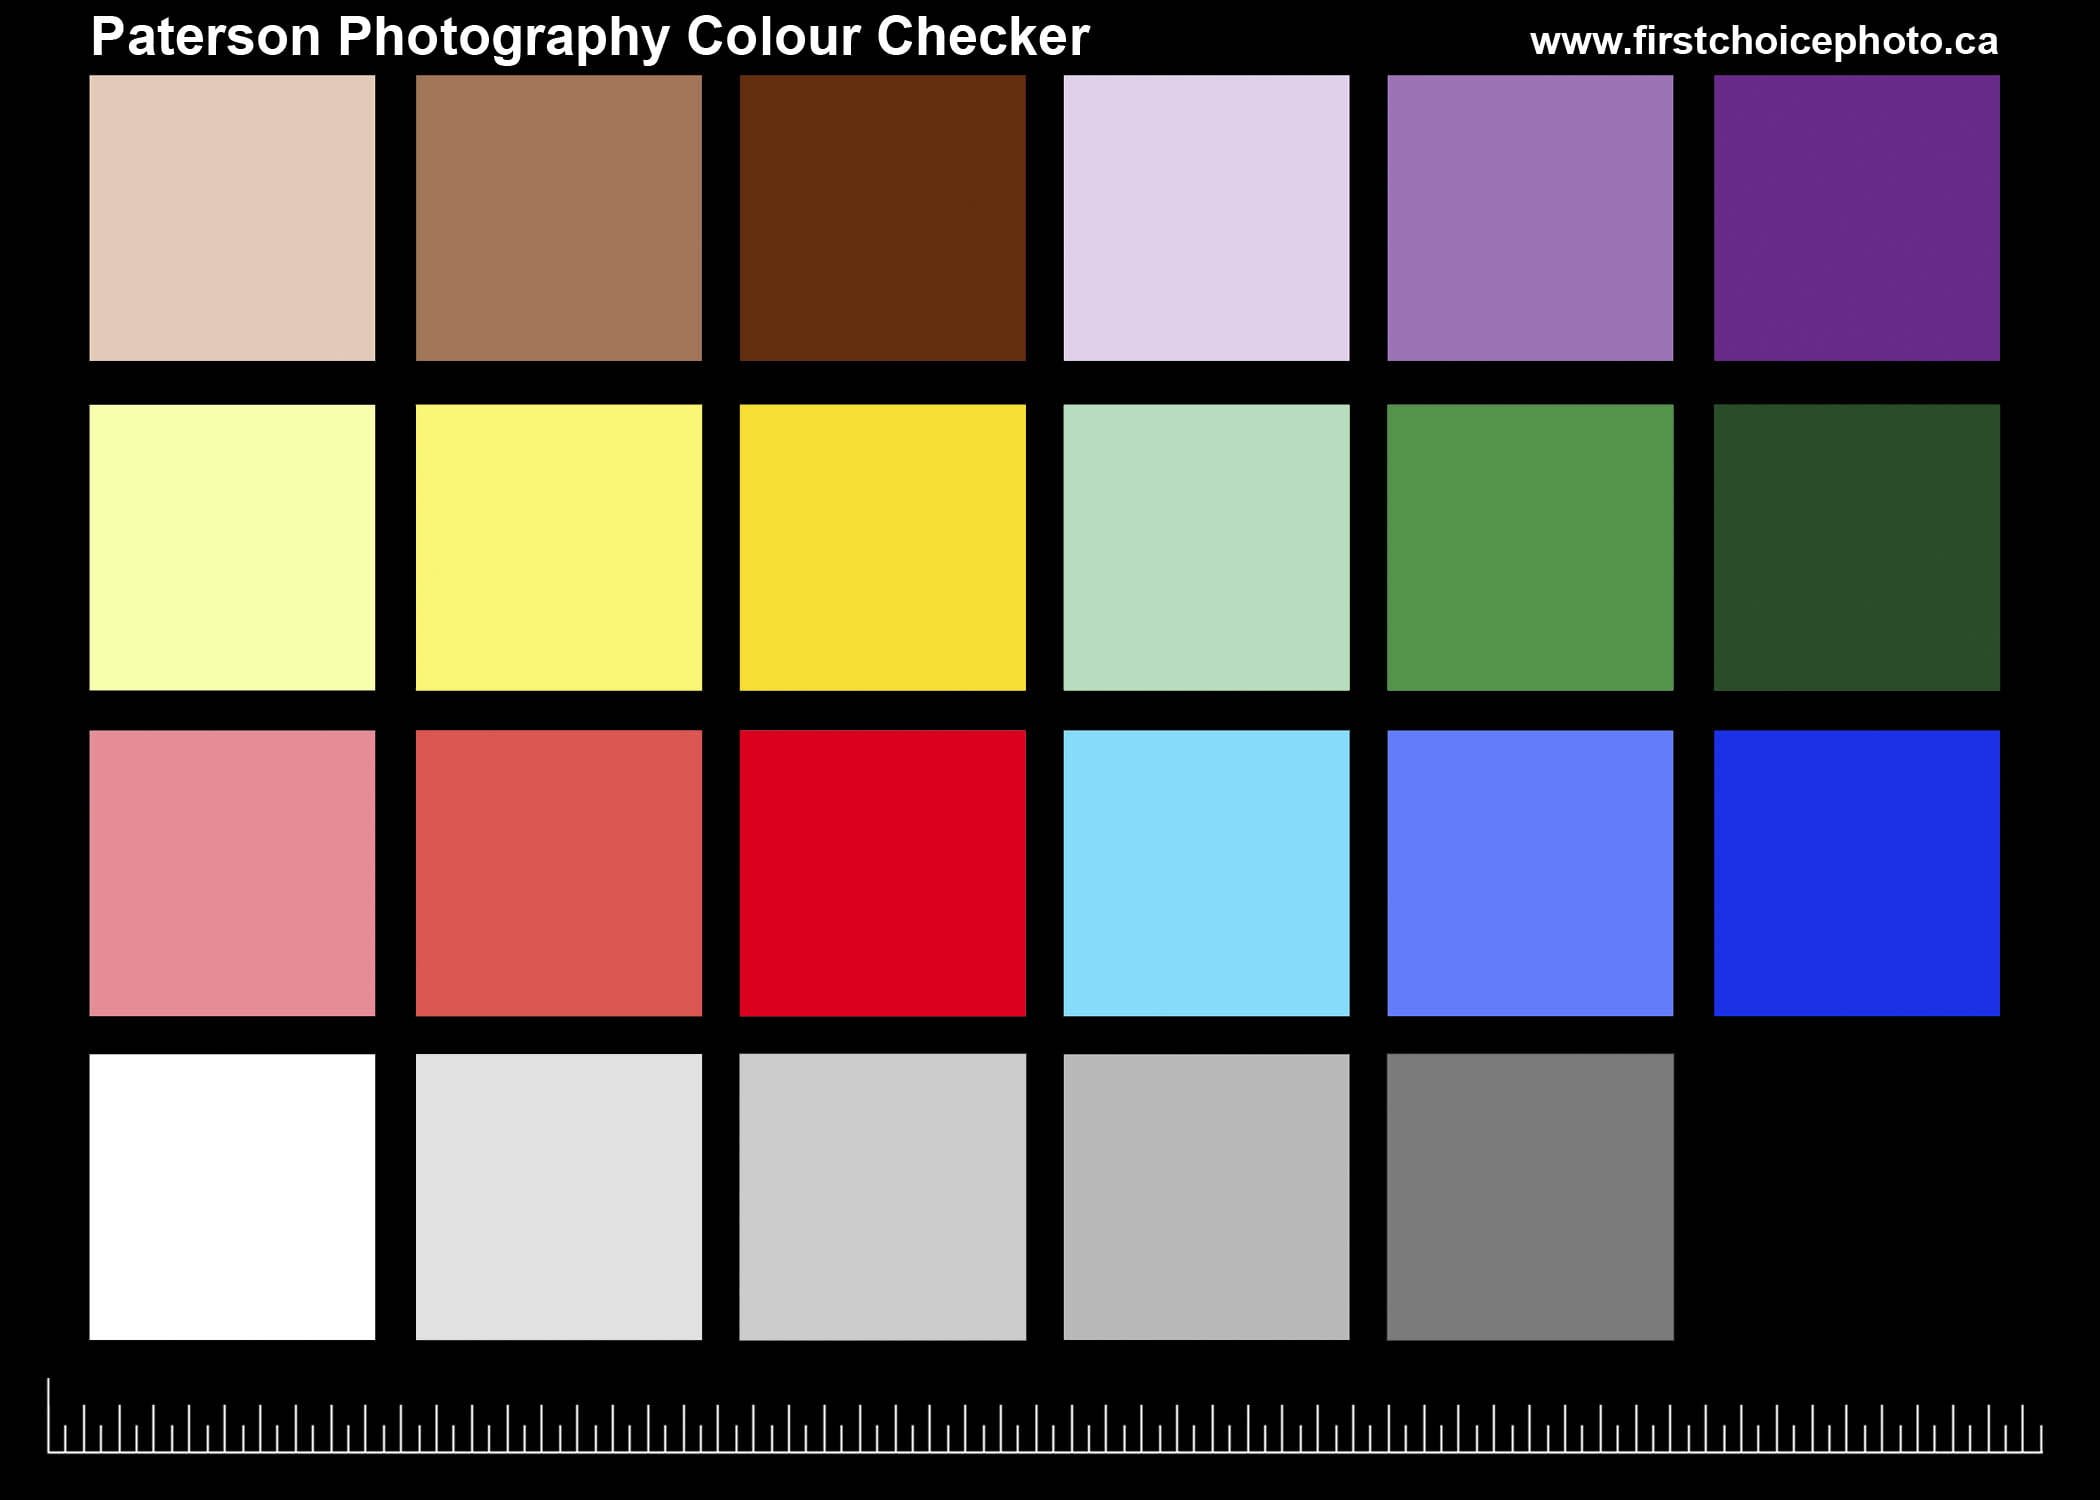 Free color checker, Download color checker, photo workshops, Photo courses